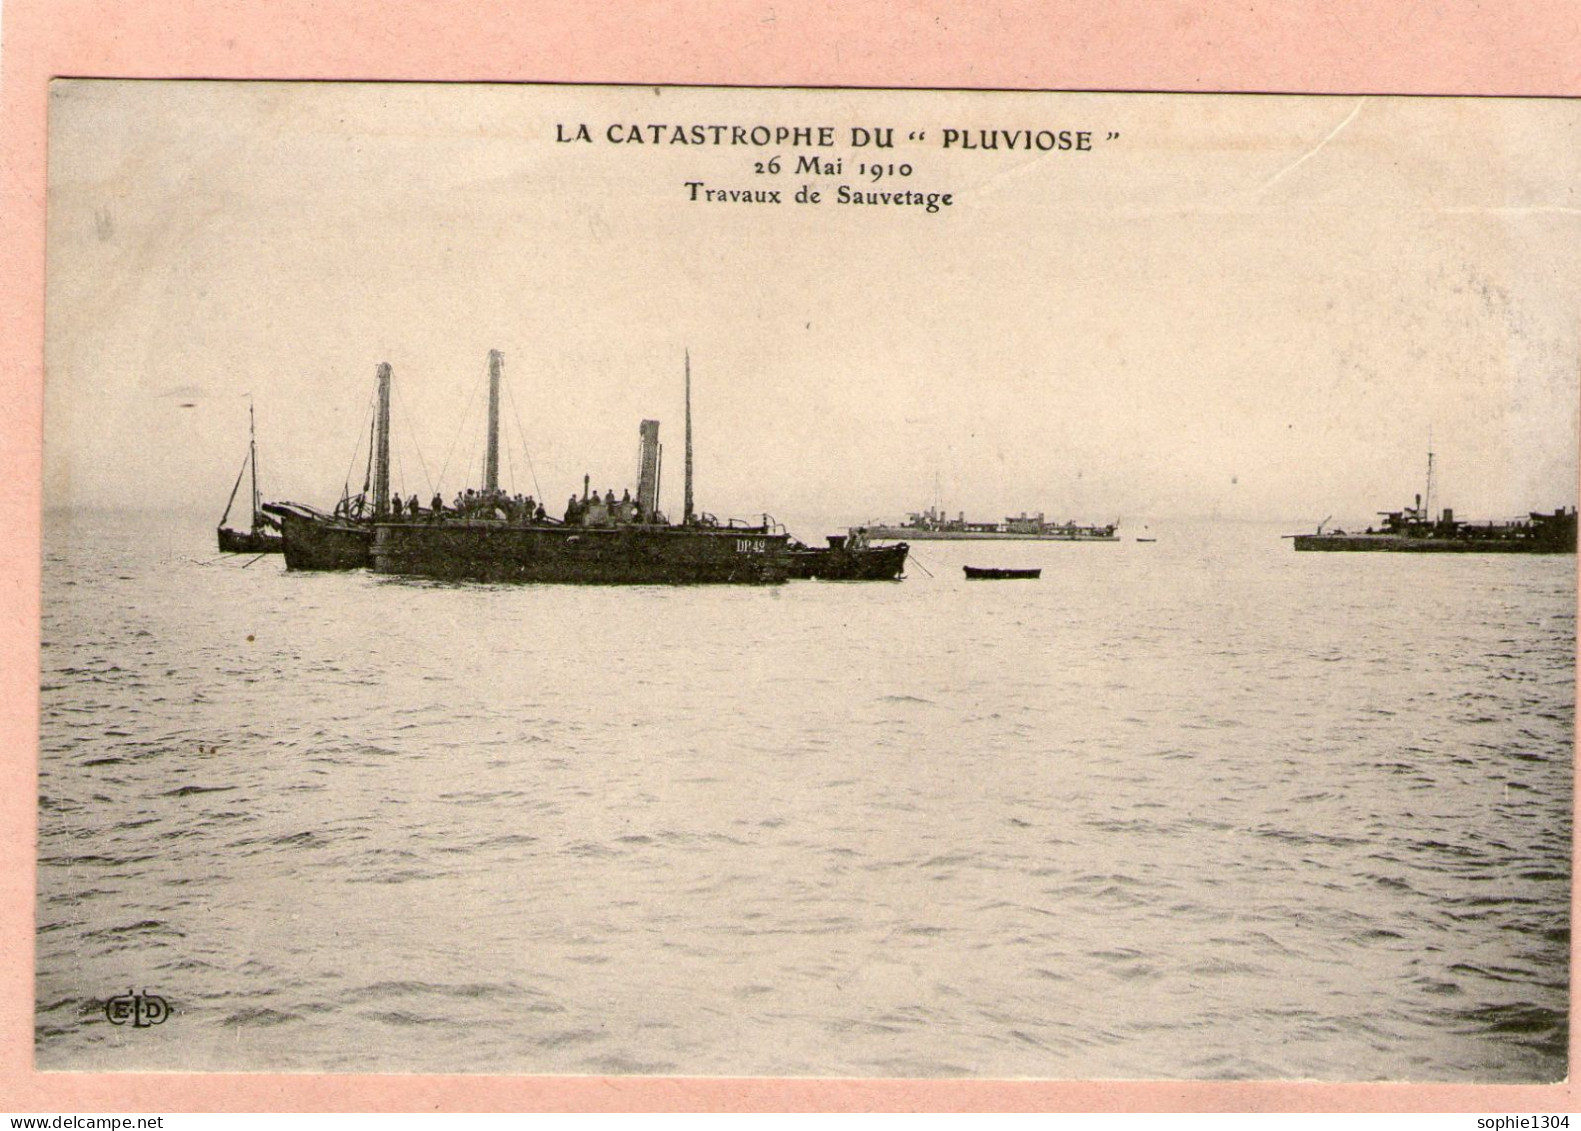 LA CATASTROPHE DU "PLUVIOSE" - 26 MAI 1910 - Travaux De Sauvetage - - Submarinos